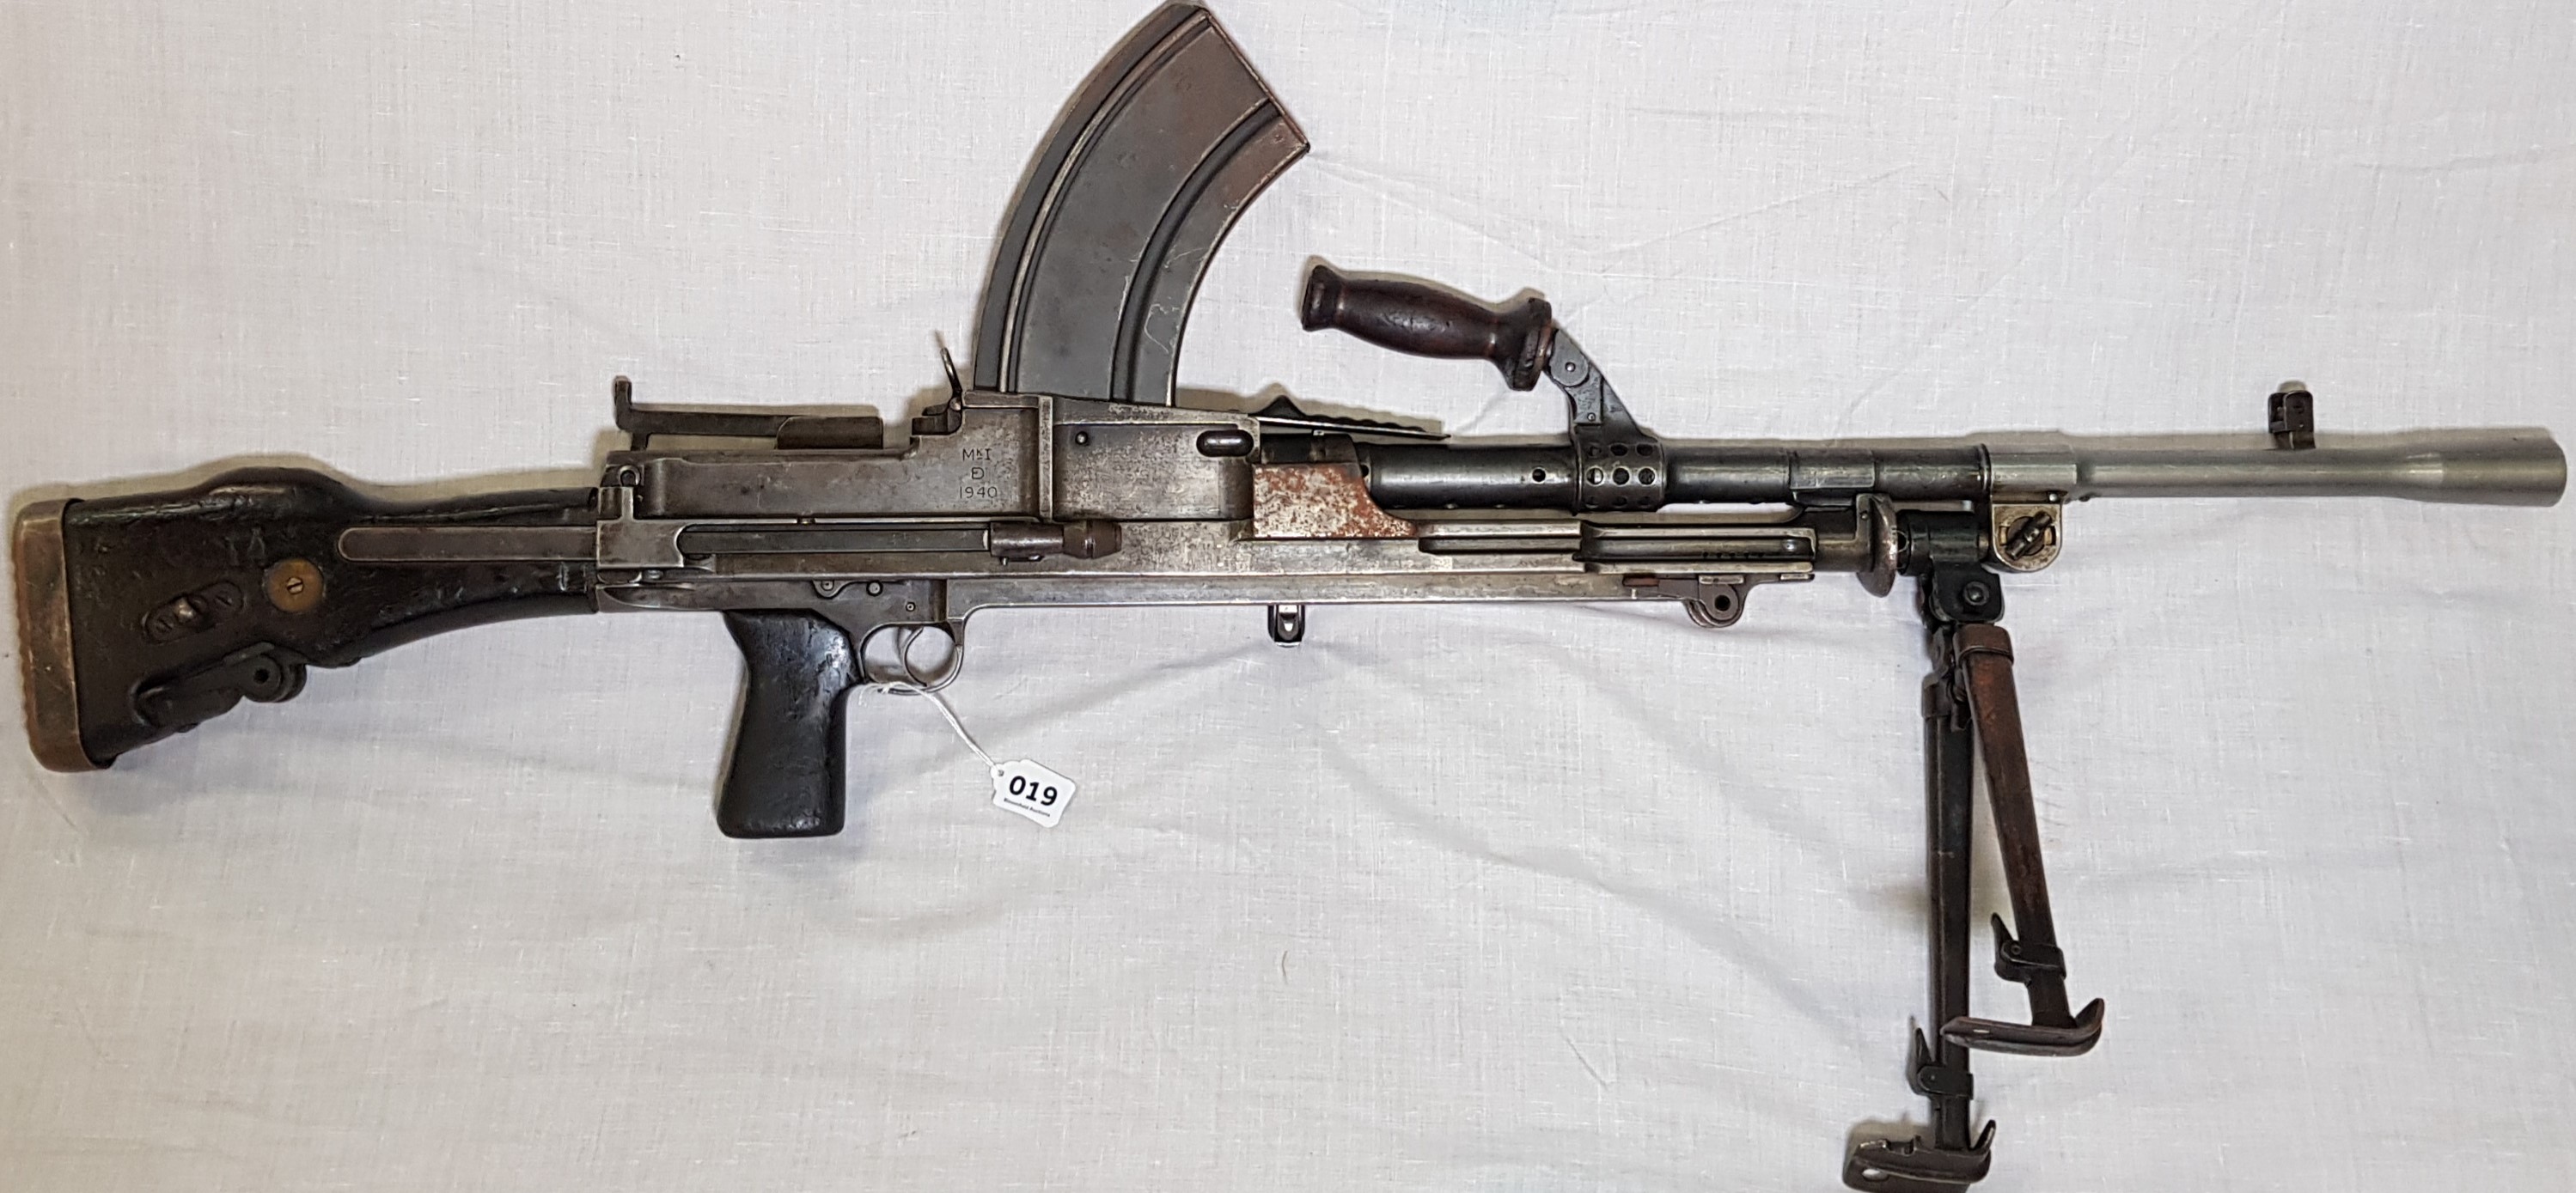 DEACTIVATED BRITISH WW2 MK1 BREN LIGHT MACHINE GUN AND BIPOD DATED 1940